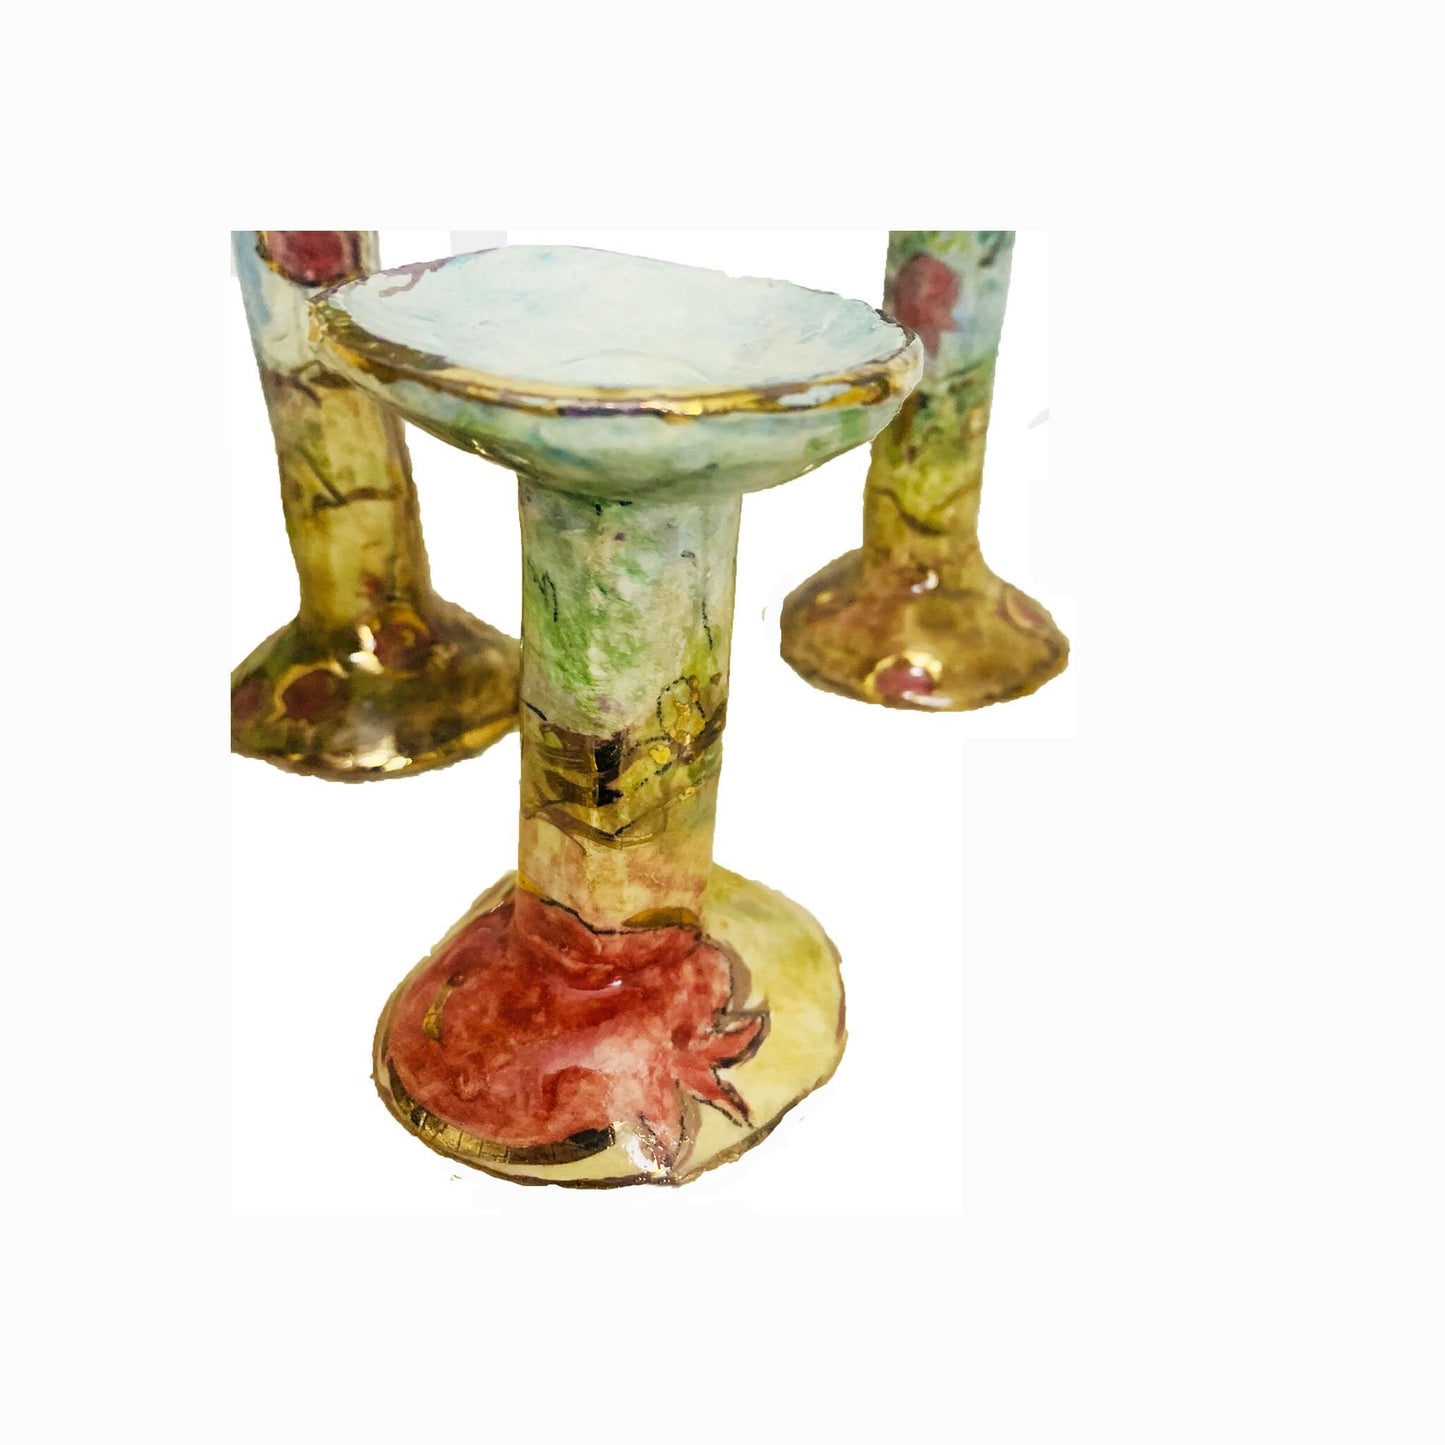 Pomegranate Ceramic Candlesticks from the Holy Land of Israel | Abundance Orchard | Judaic Art Handmade in Jerusalem